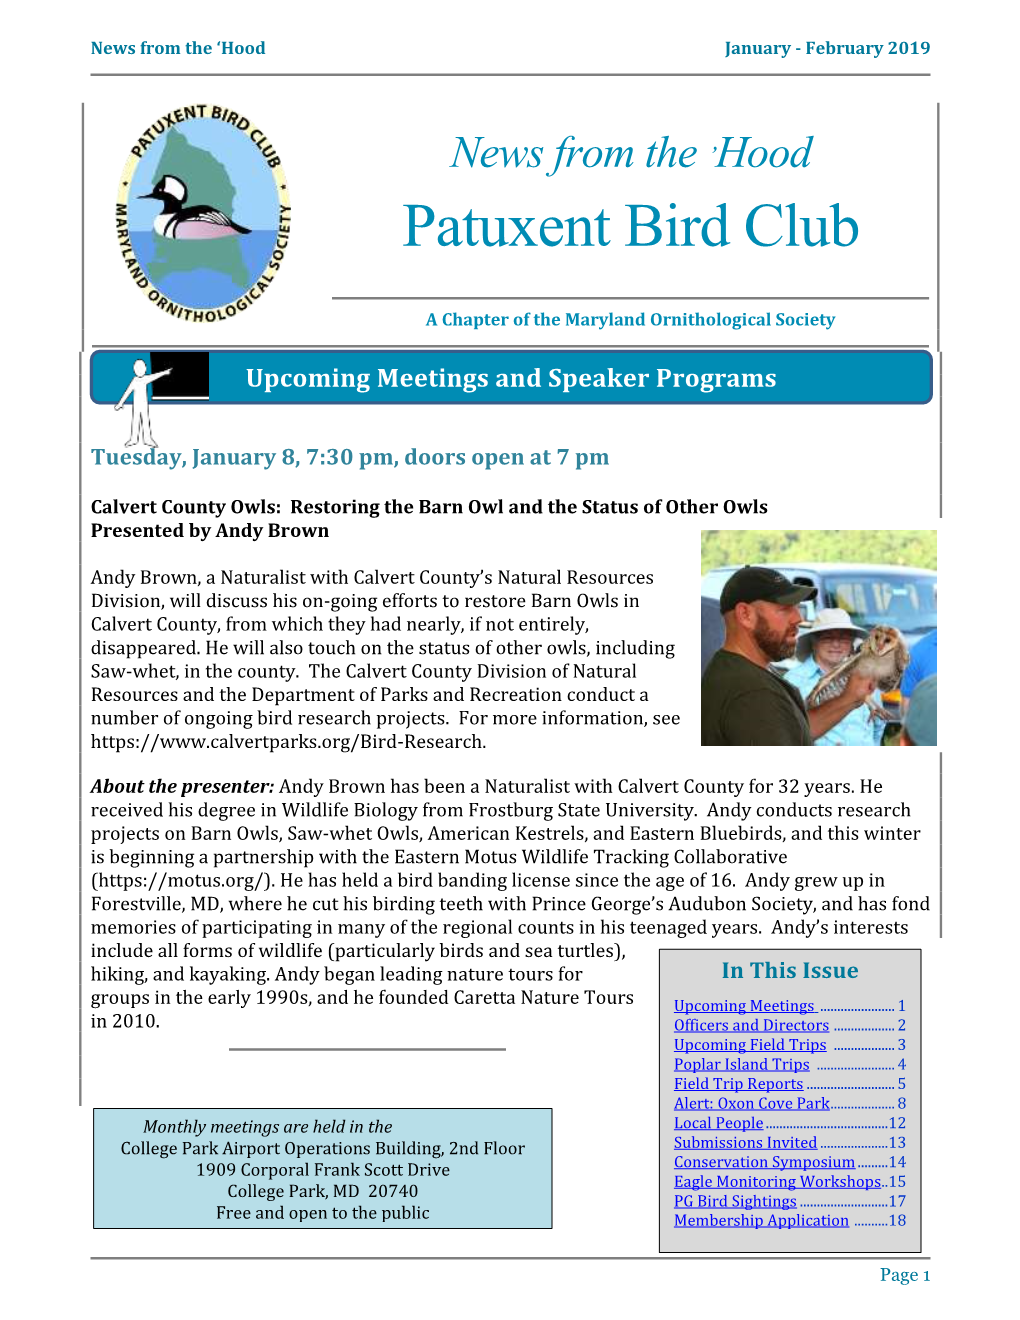 Patuxent Bird Club